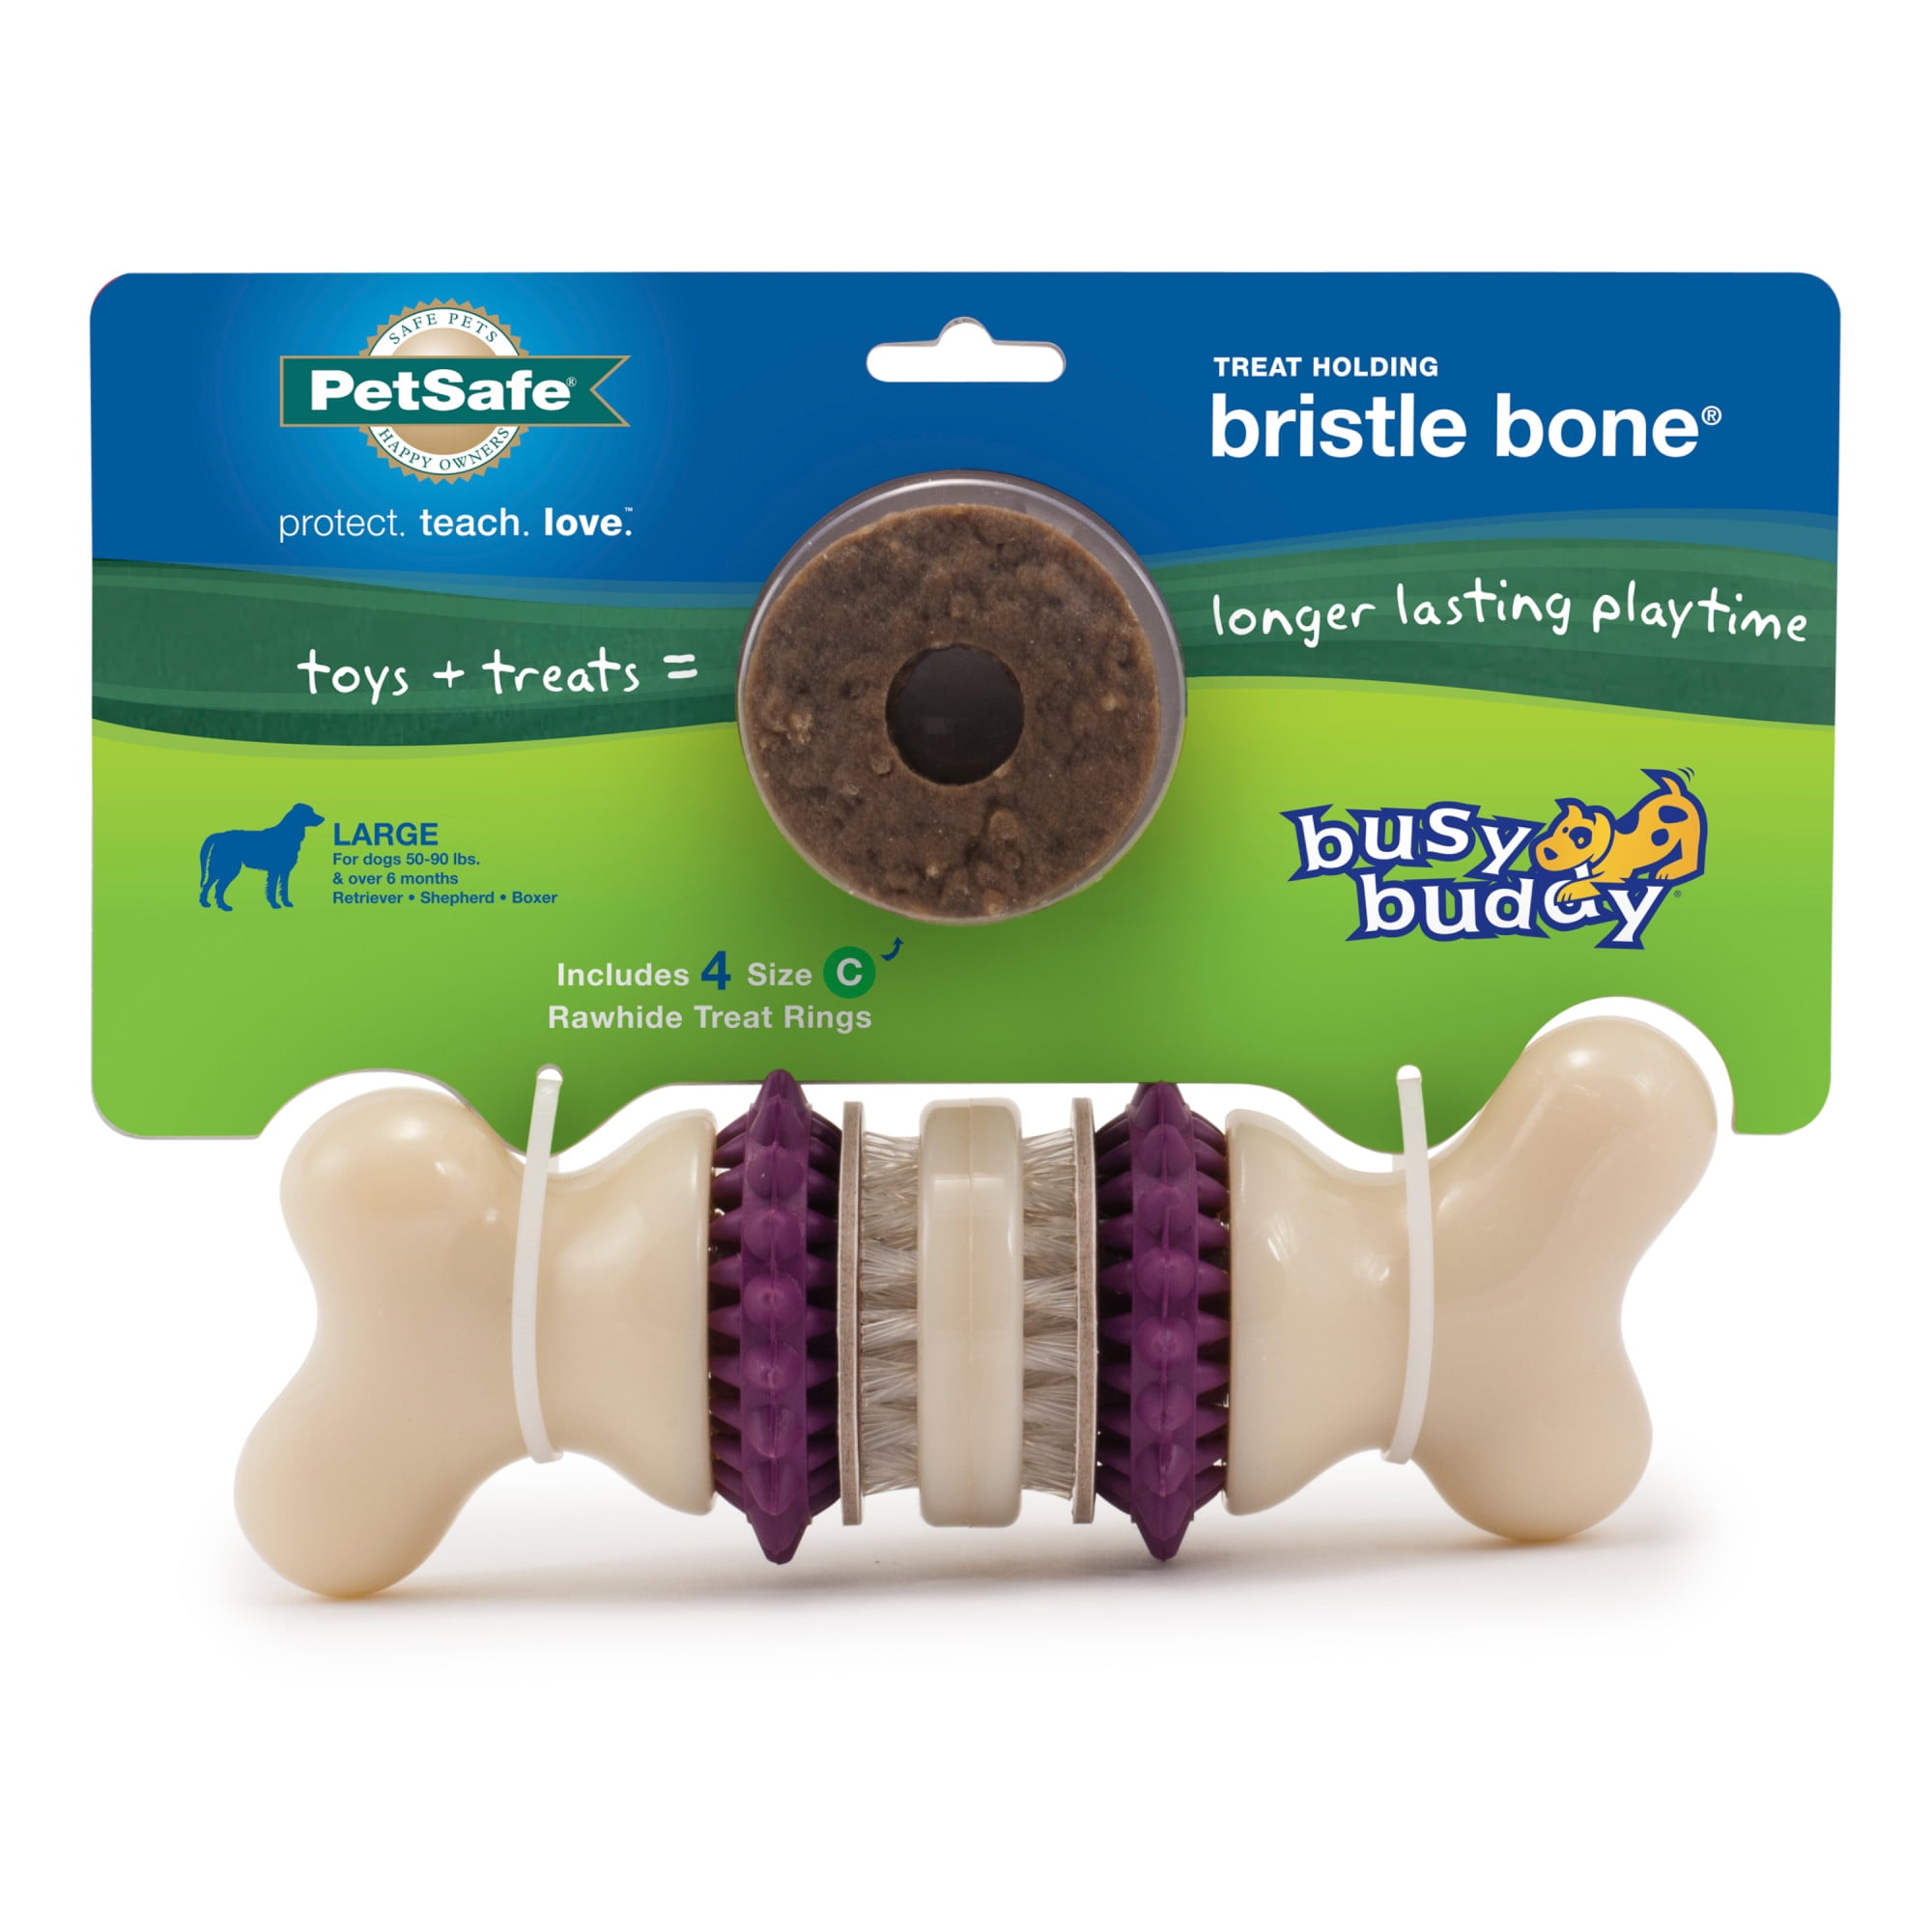 PetSafe Busy Buddy Bristle Bone, Keep Dog's Teeth Clean, Long-Lasting,  Large 